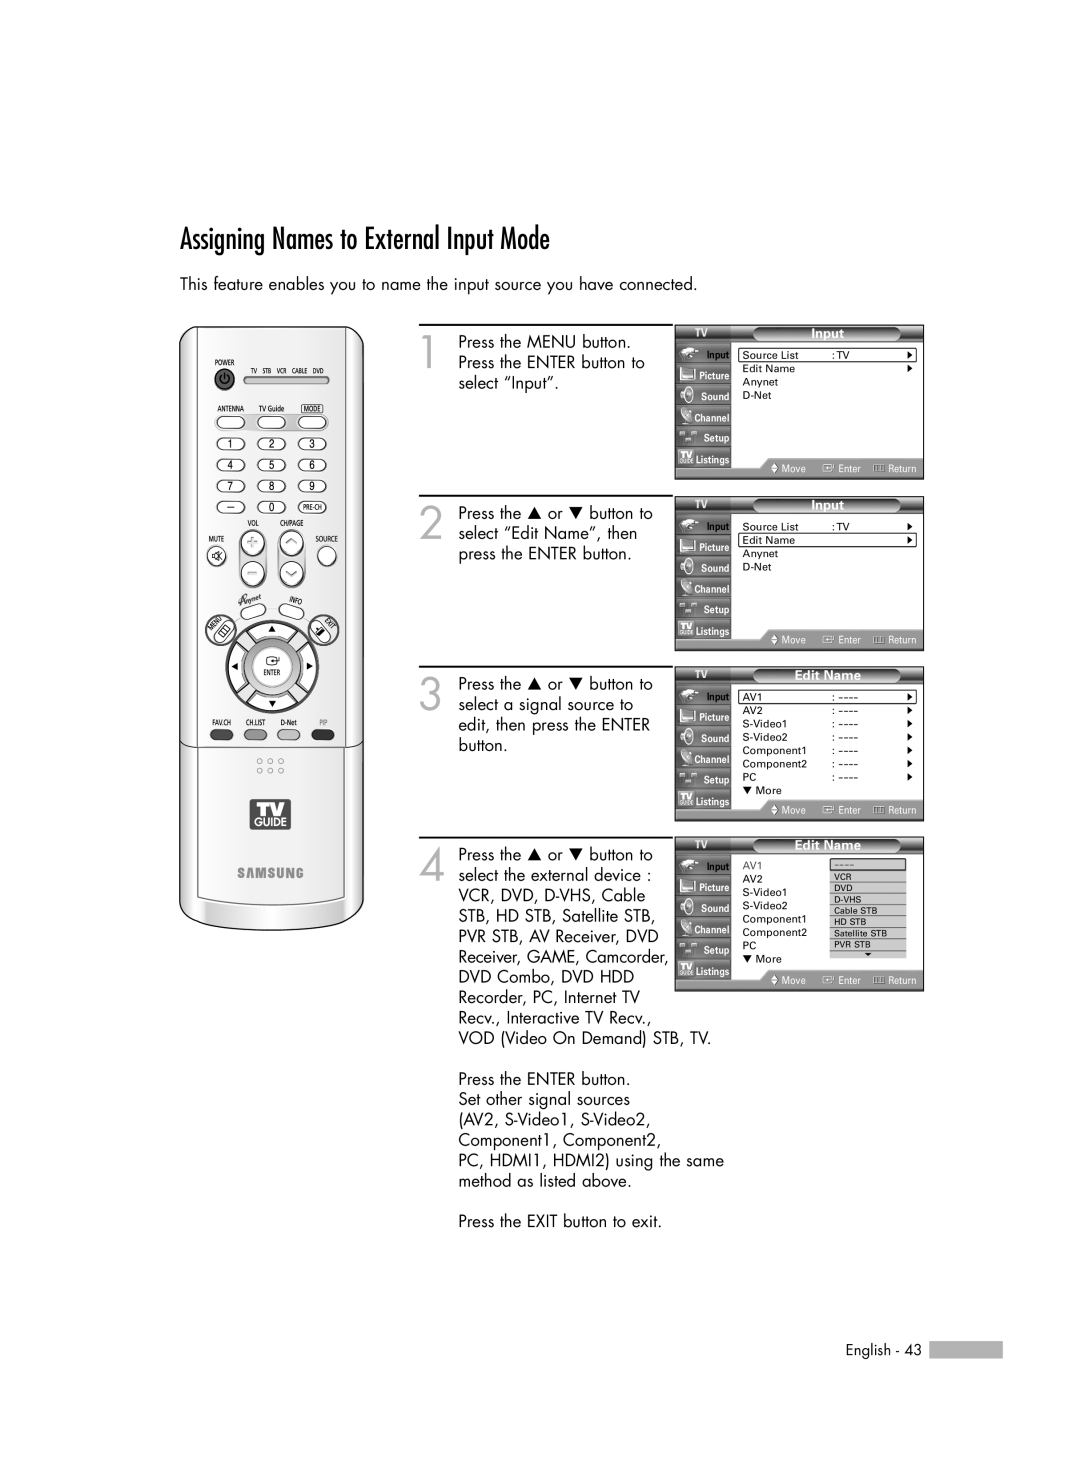 Samsung HL-R5688W manual Assigning Names to External Input Mode 